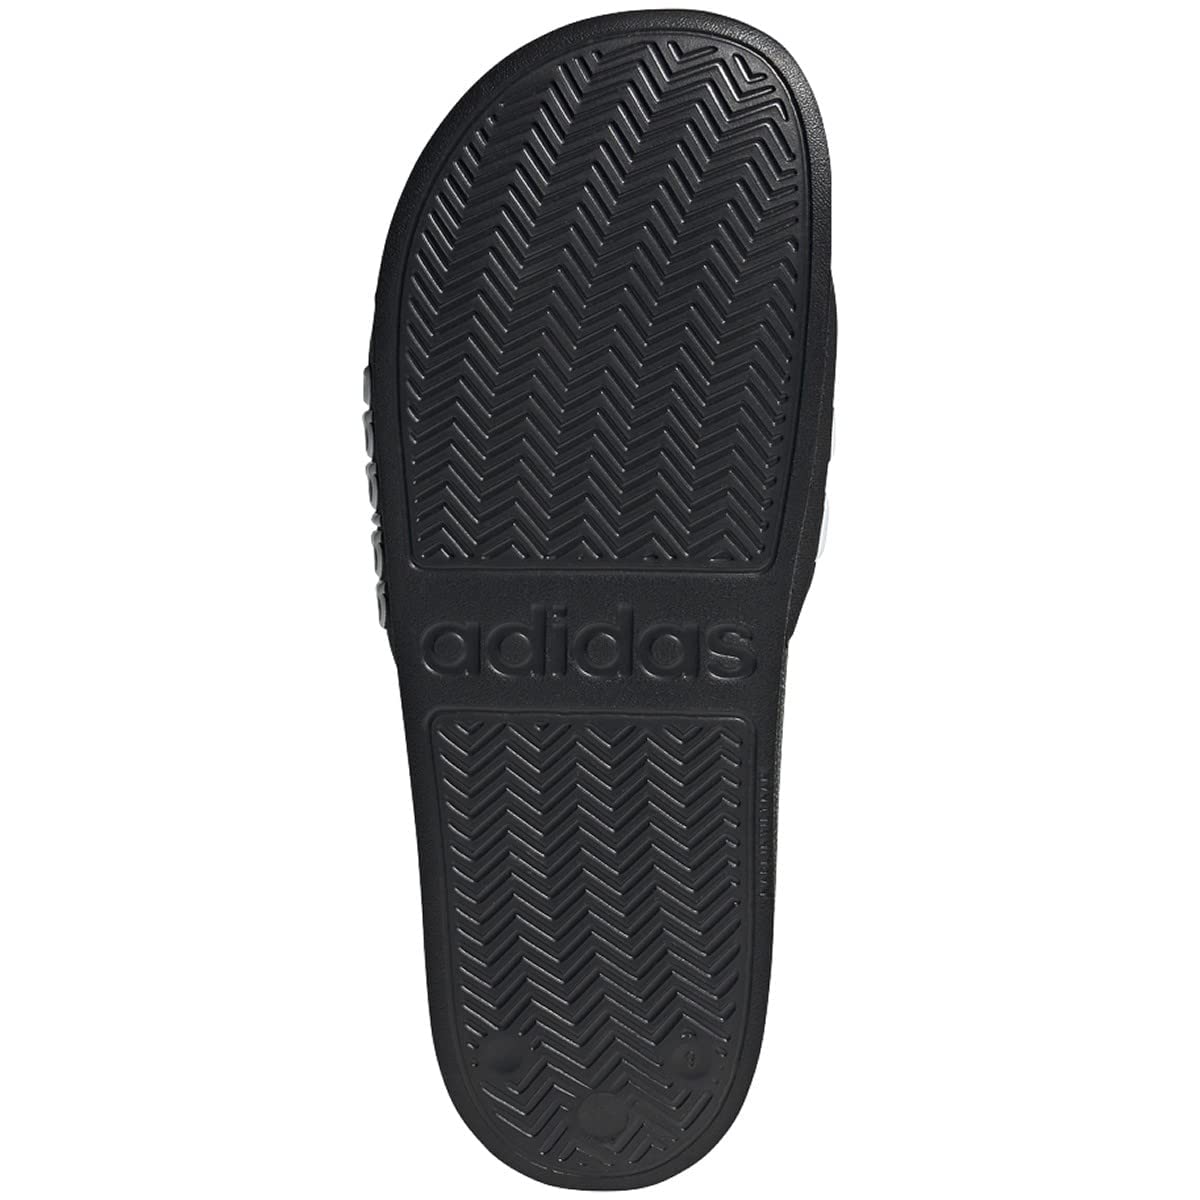 adidas Unisex-Adult Shower Slide Sandal